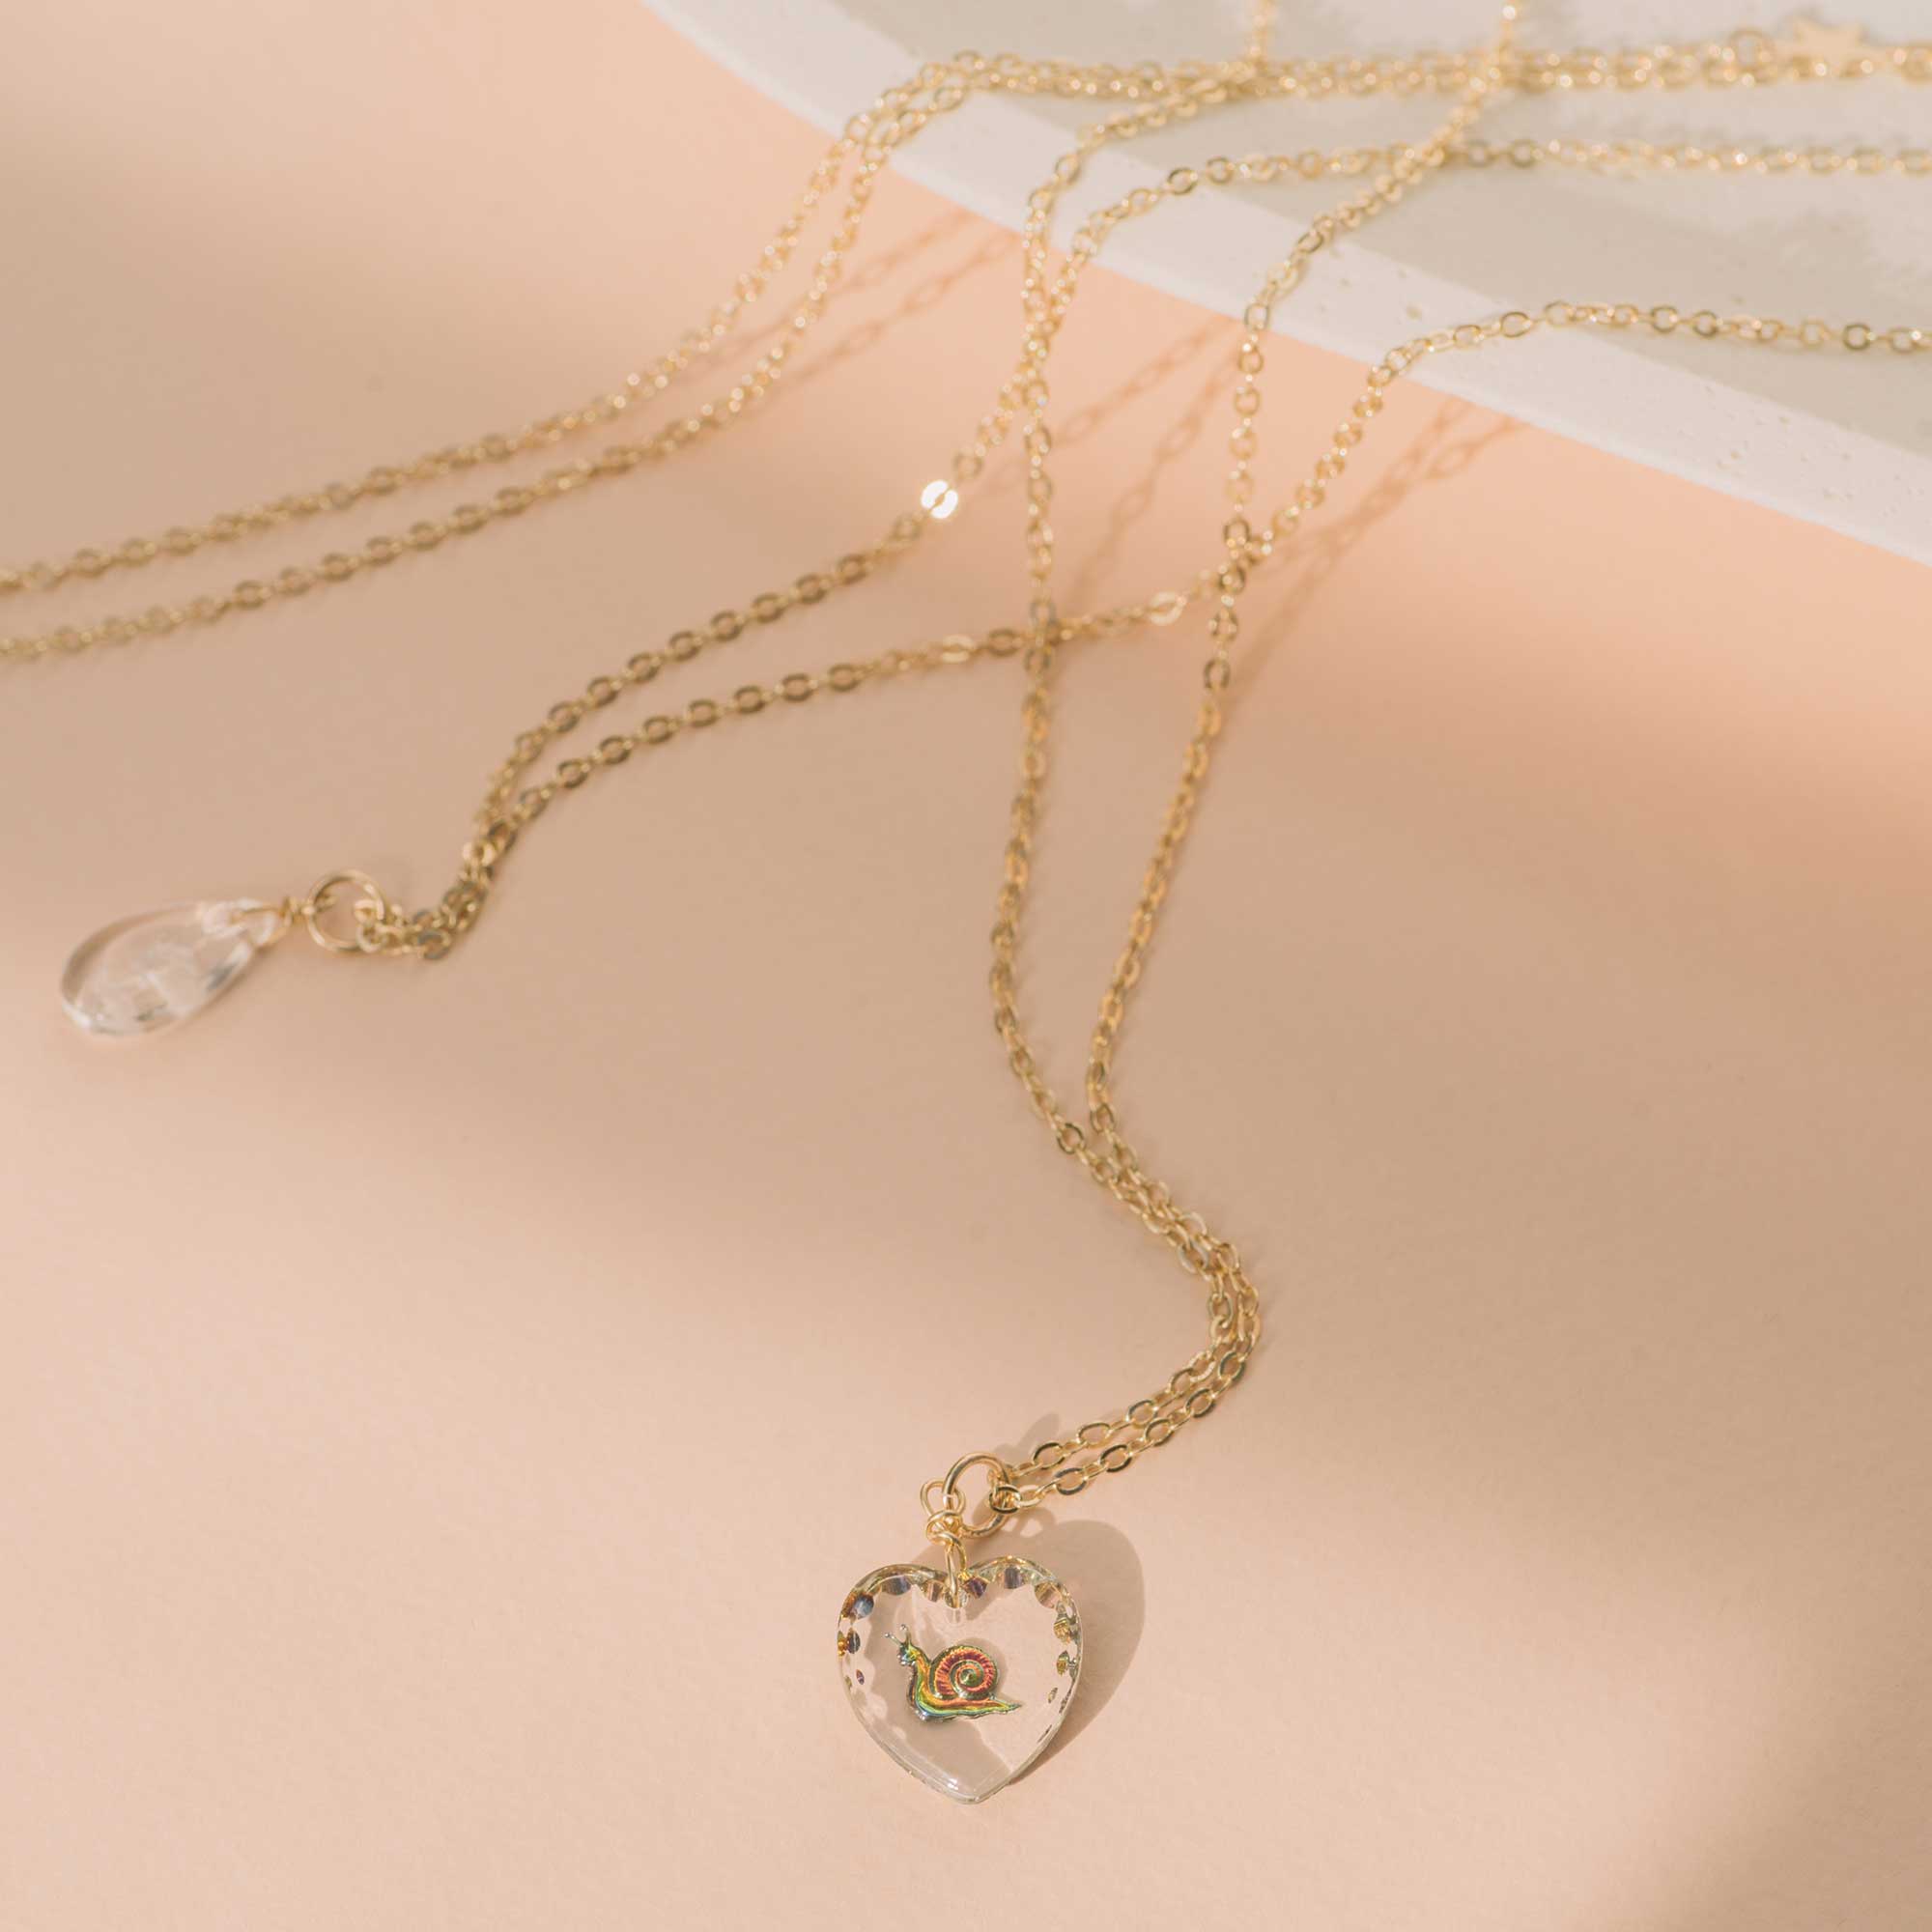 vintage charm necklaces sandrine devost jewellery